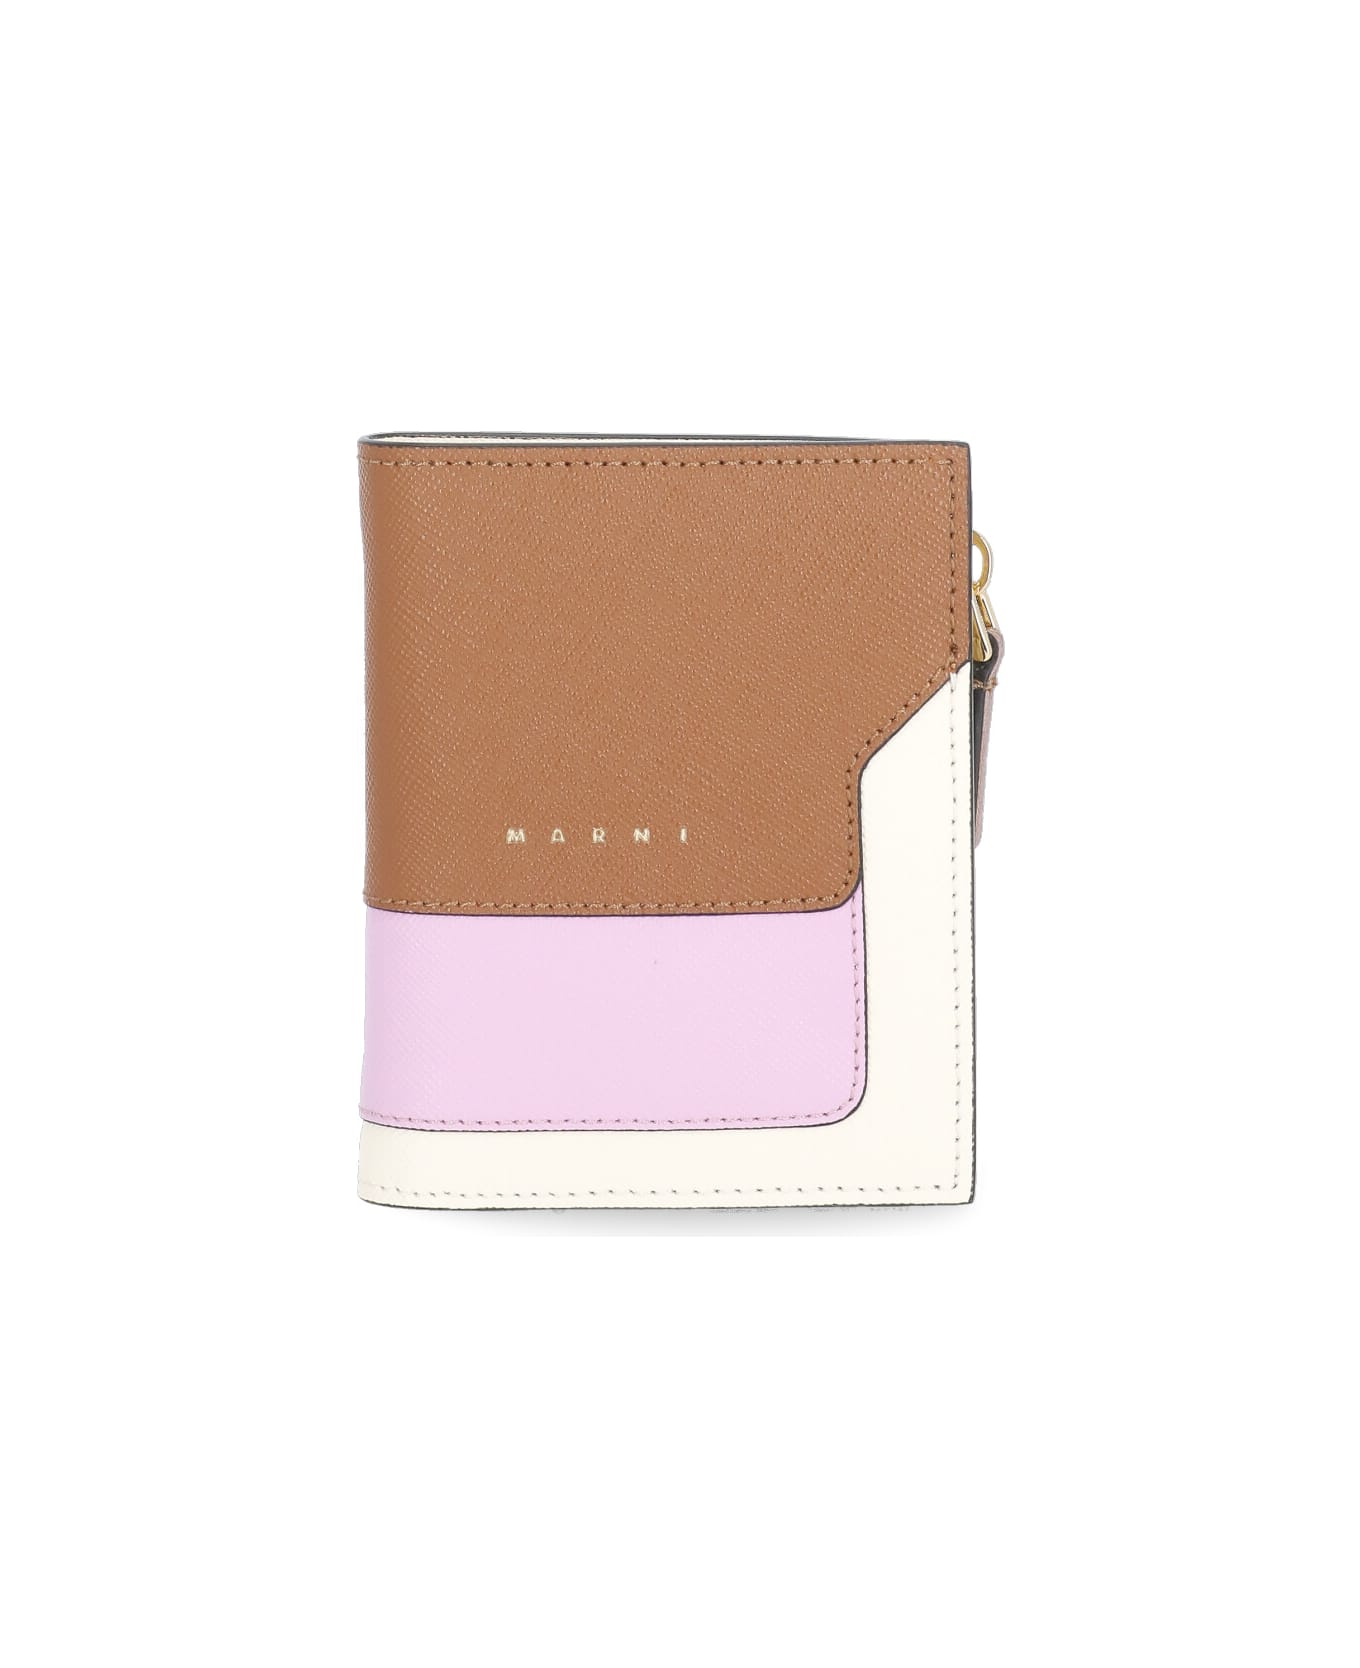 Marni Saffiano Bi-fold Wallet - MOCA/PINK CANDY/SHELL